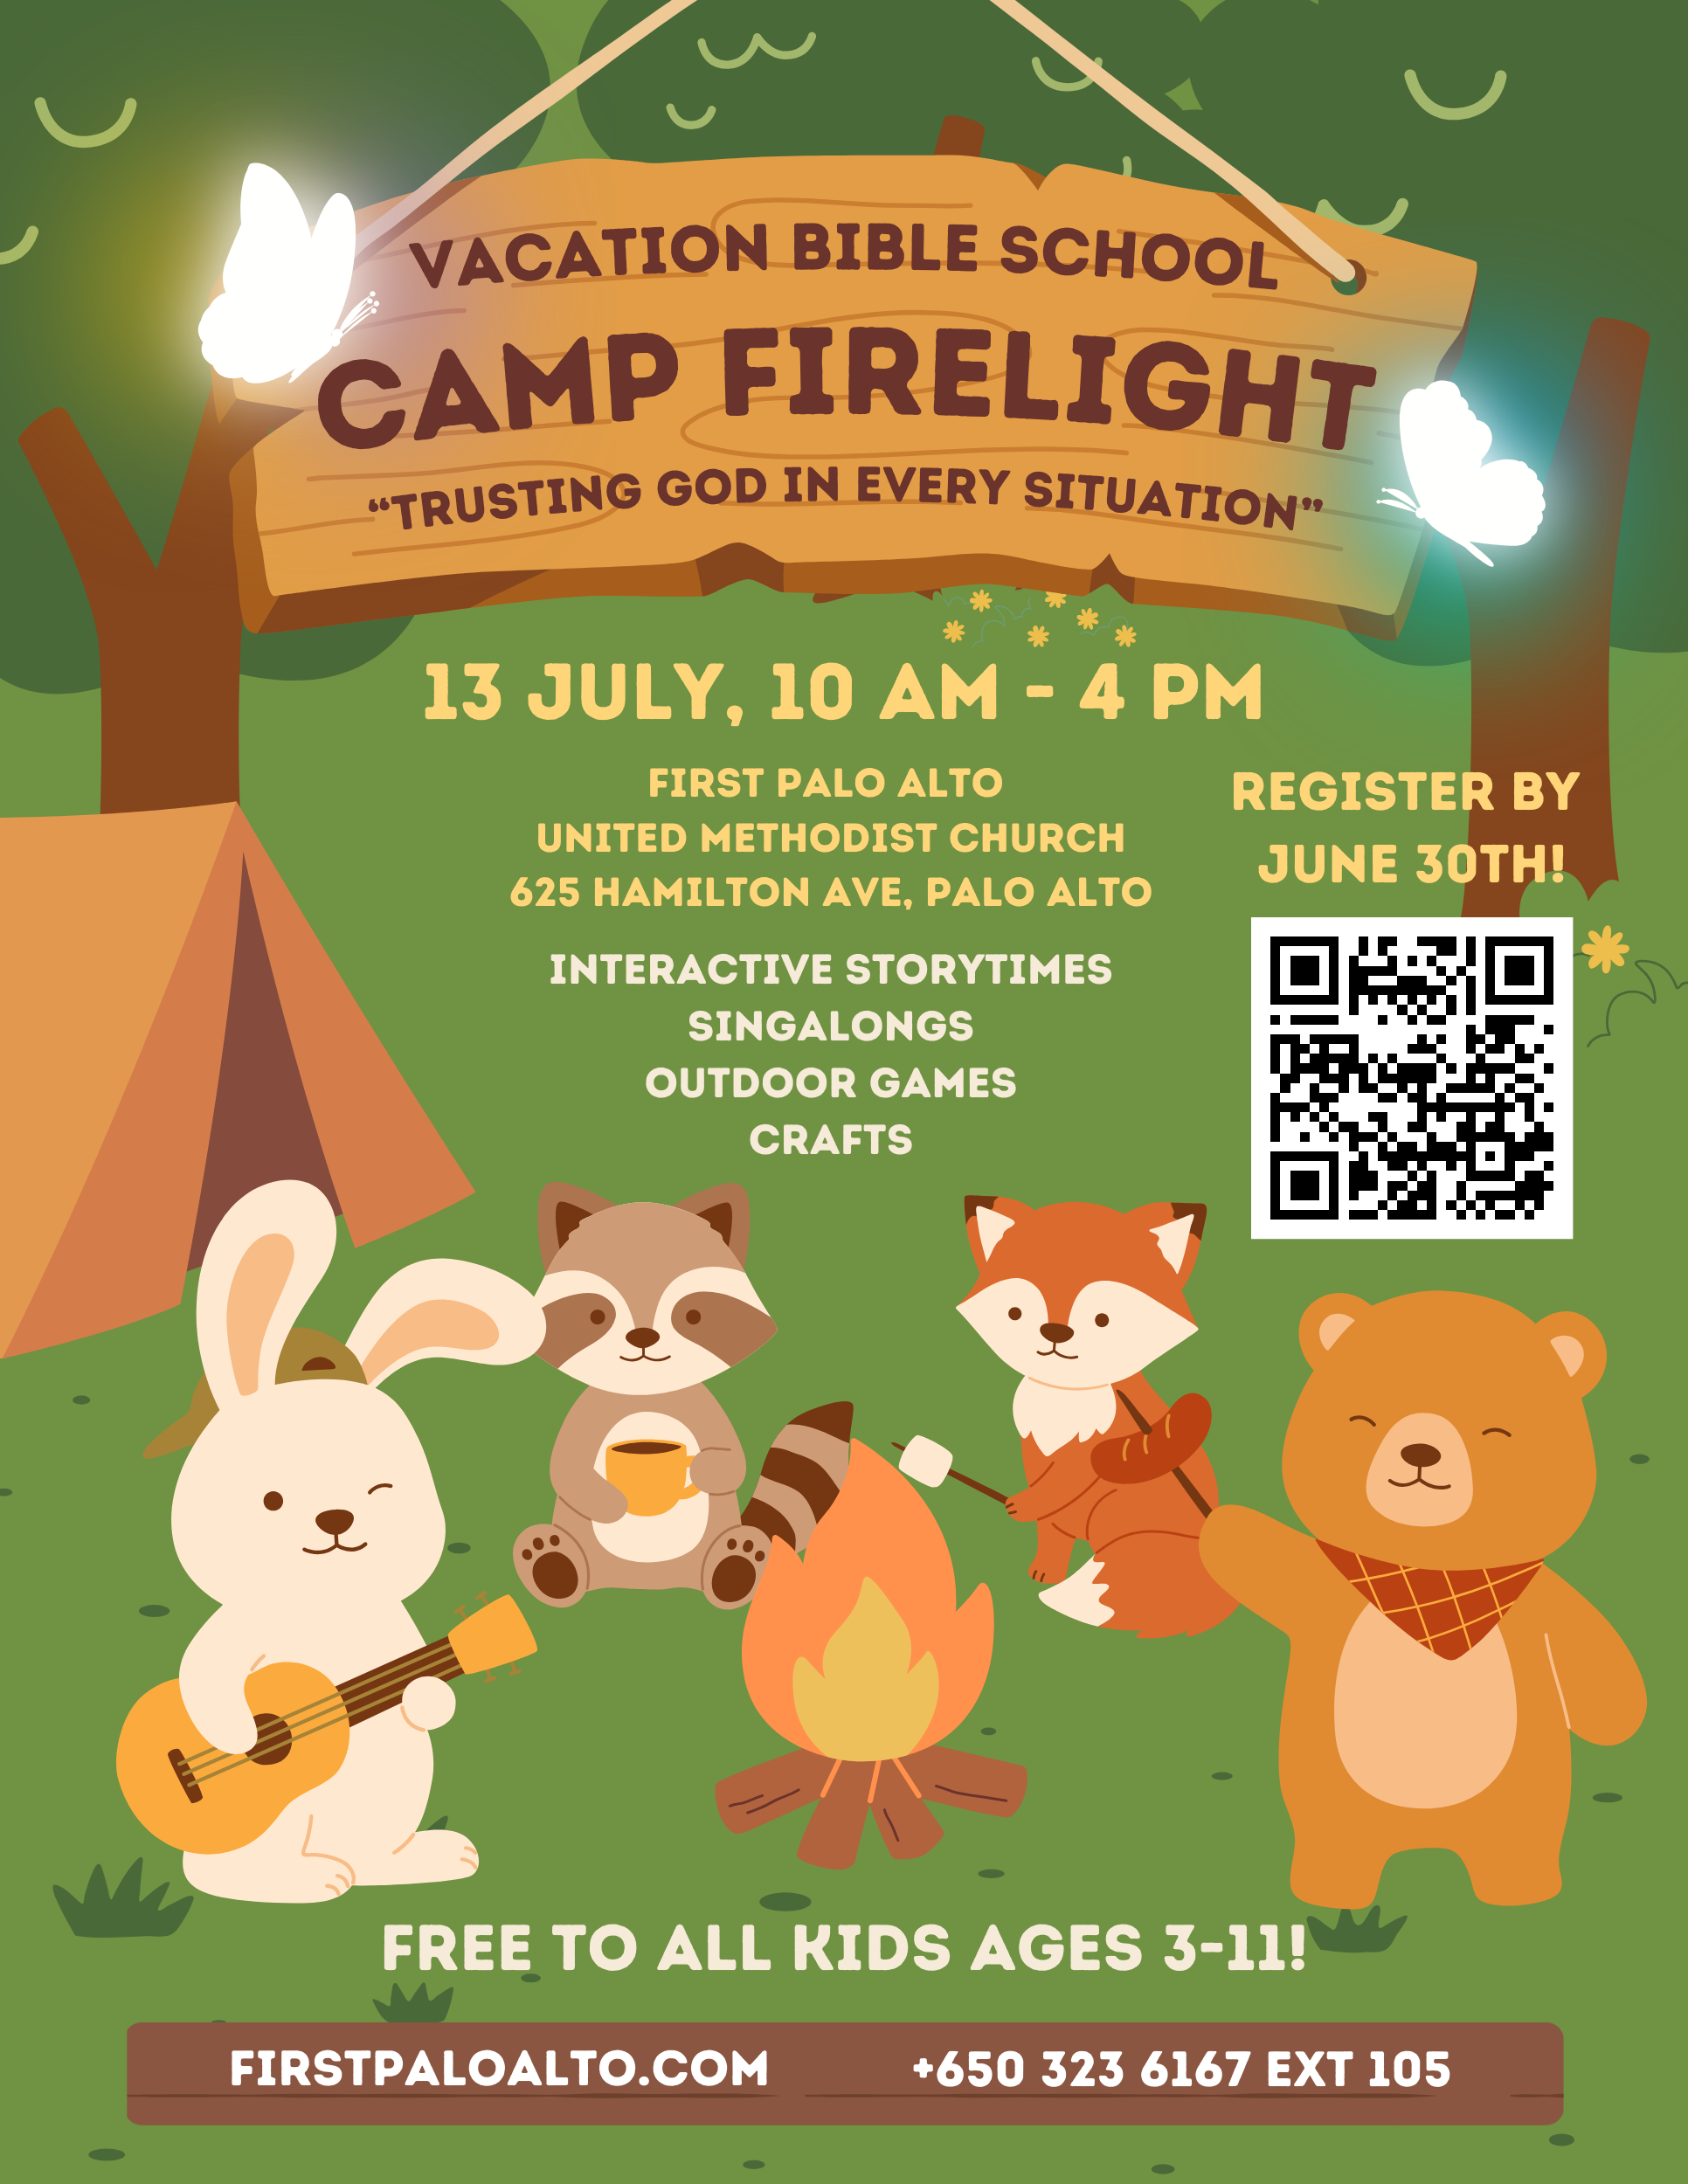 Vacation Bible School: Camp Firelight